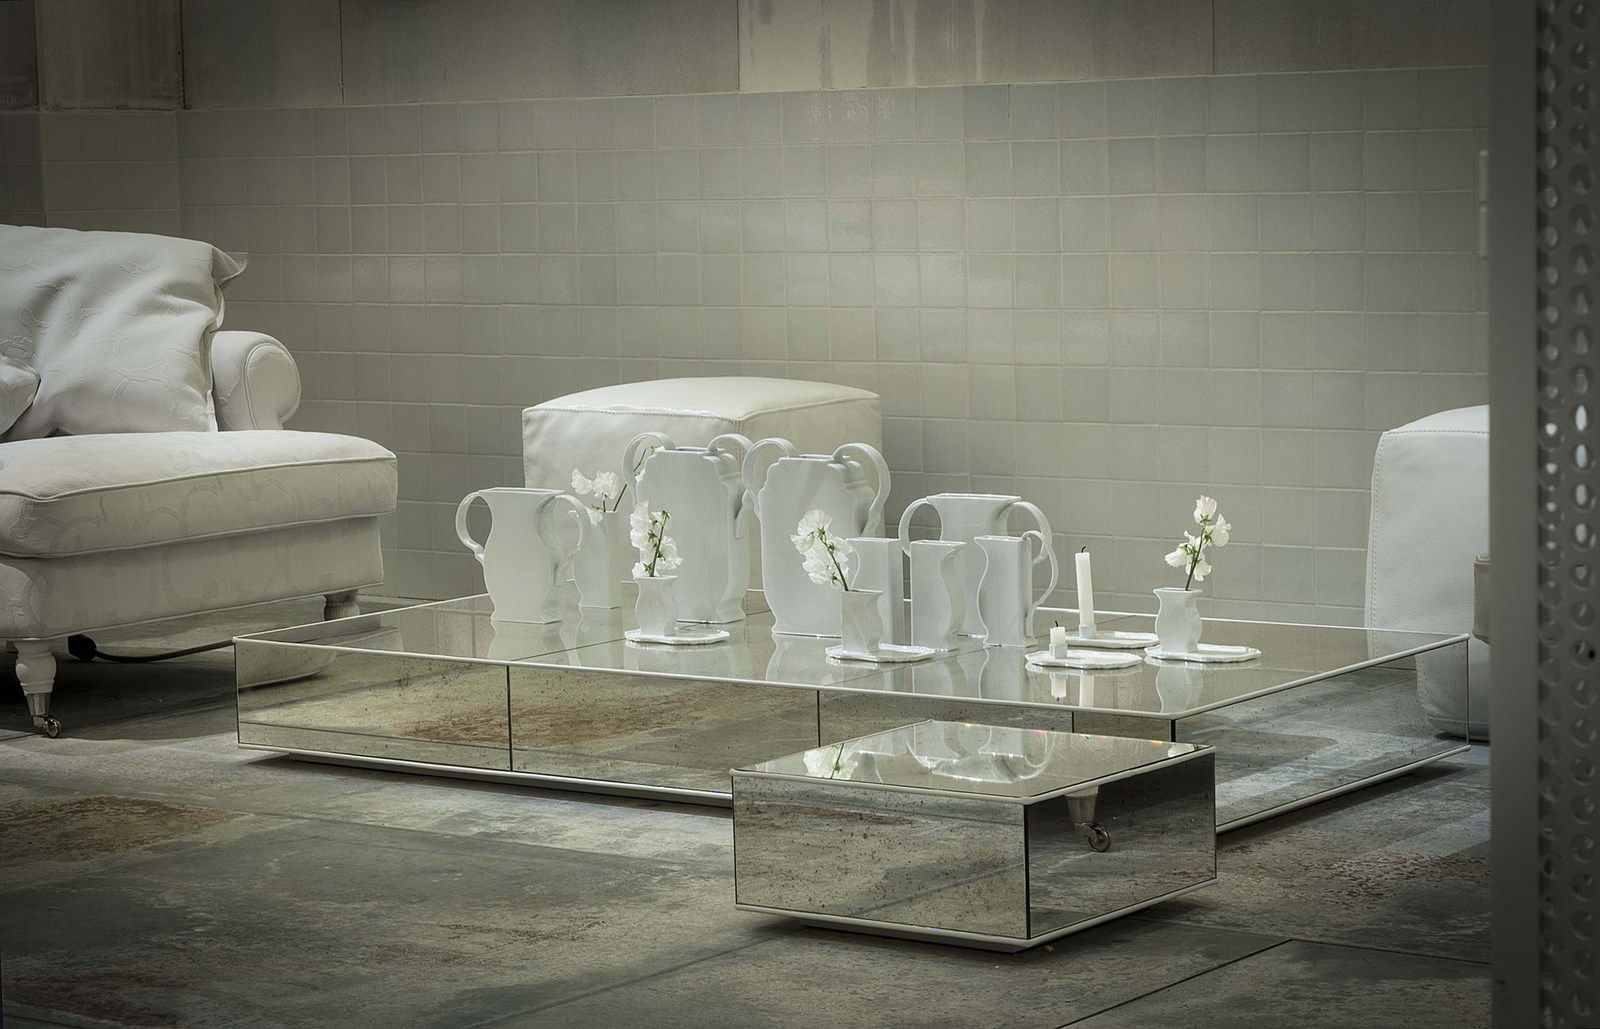 paola-navone-designs-white-fairy-tale-interiors-latest-furniture-baxter-8.jpg